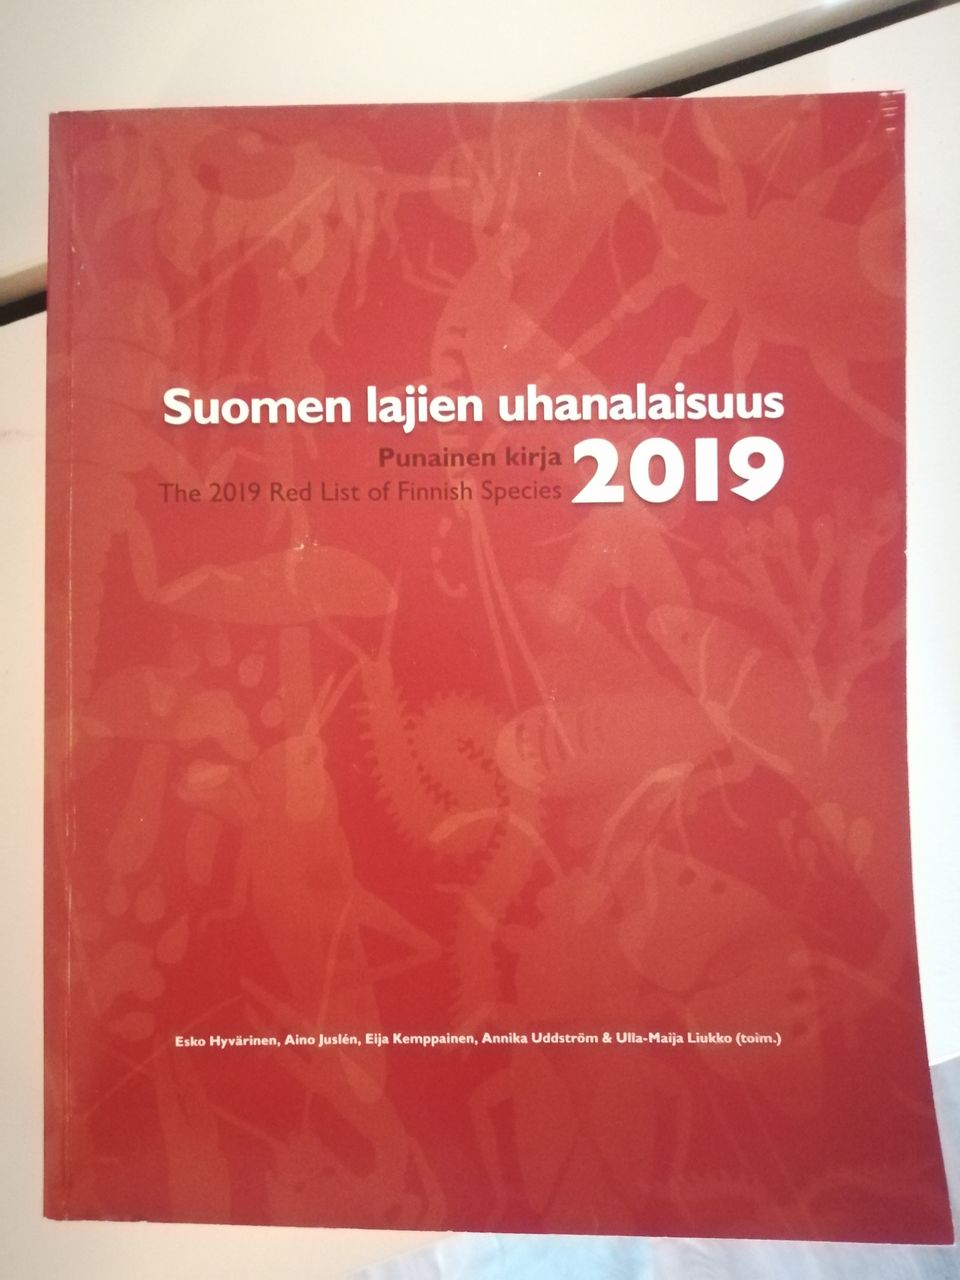 Suomen lajien uhanalaisuus, punainen kirja 2019